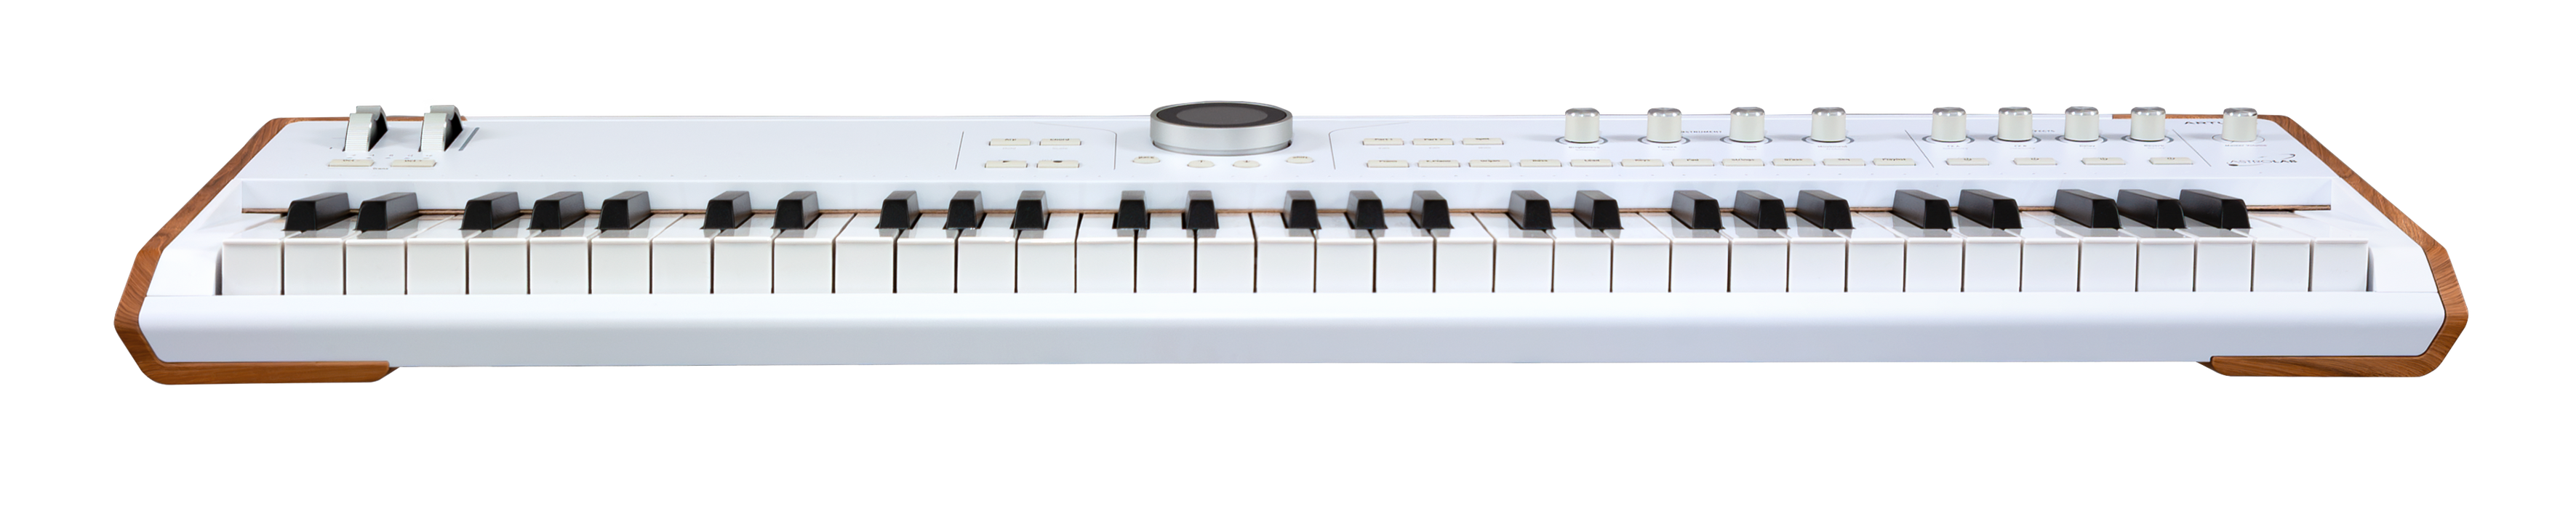 Arturia Astrolab 61 key semi-weighted stage keyboard, White